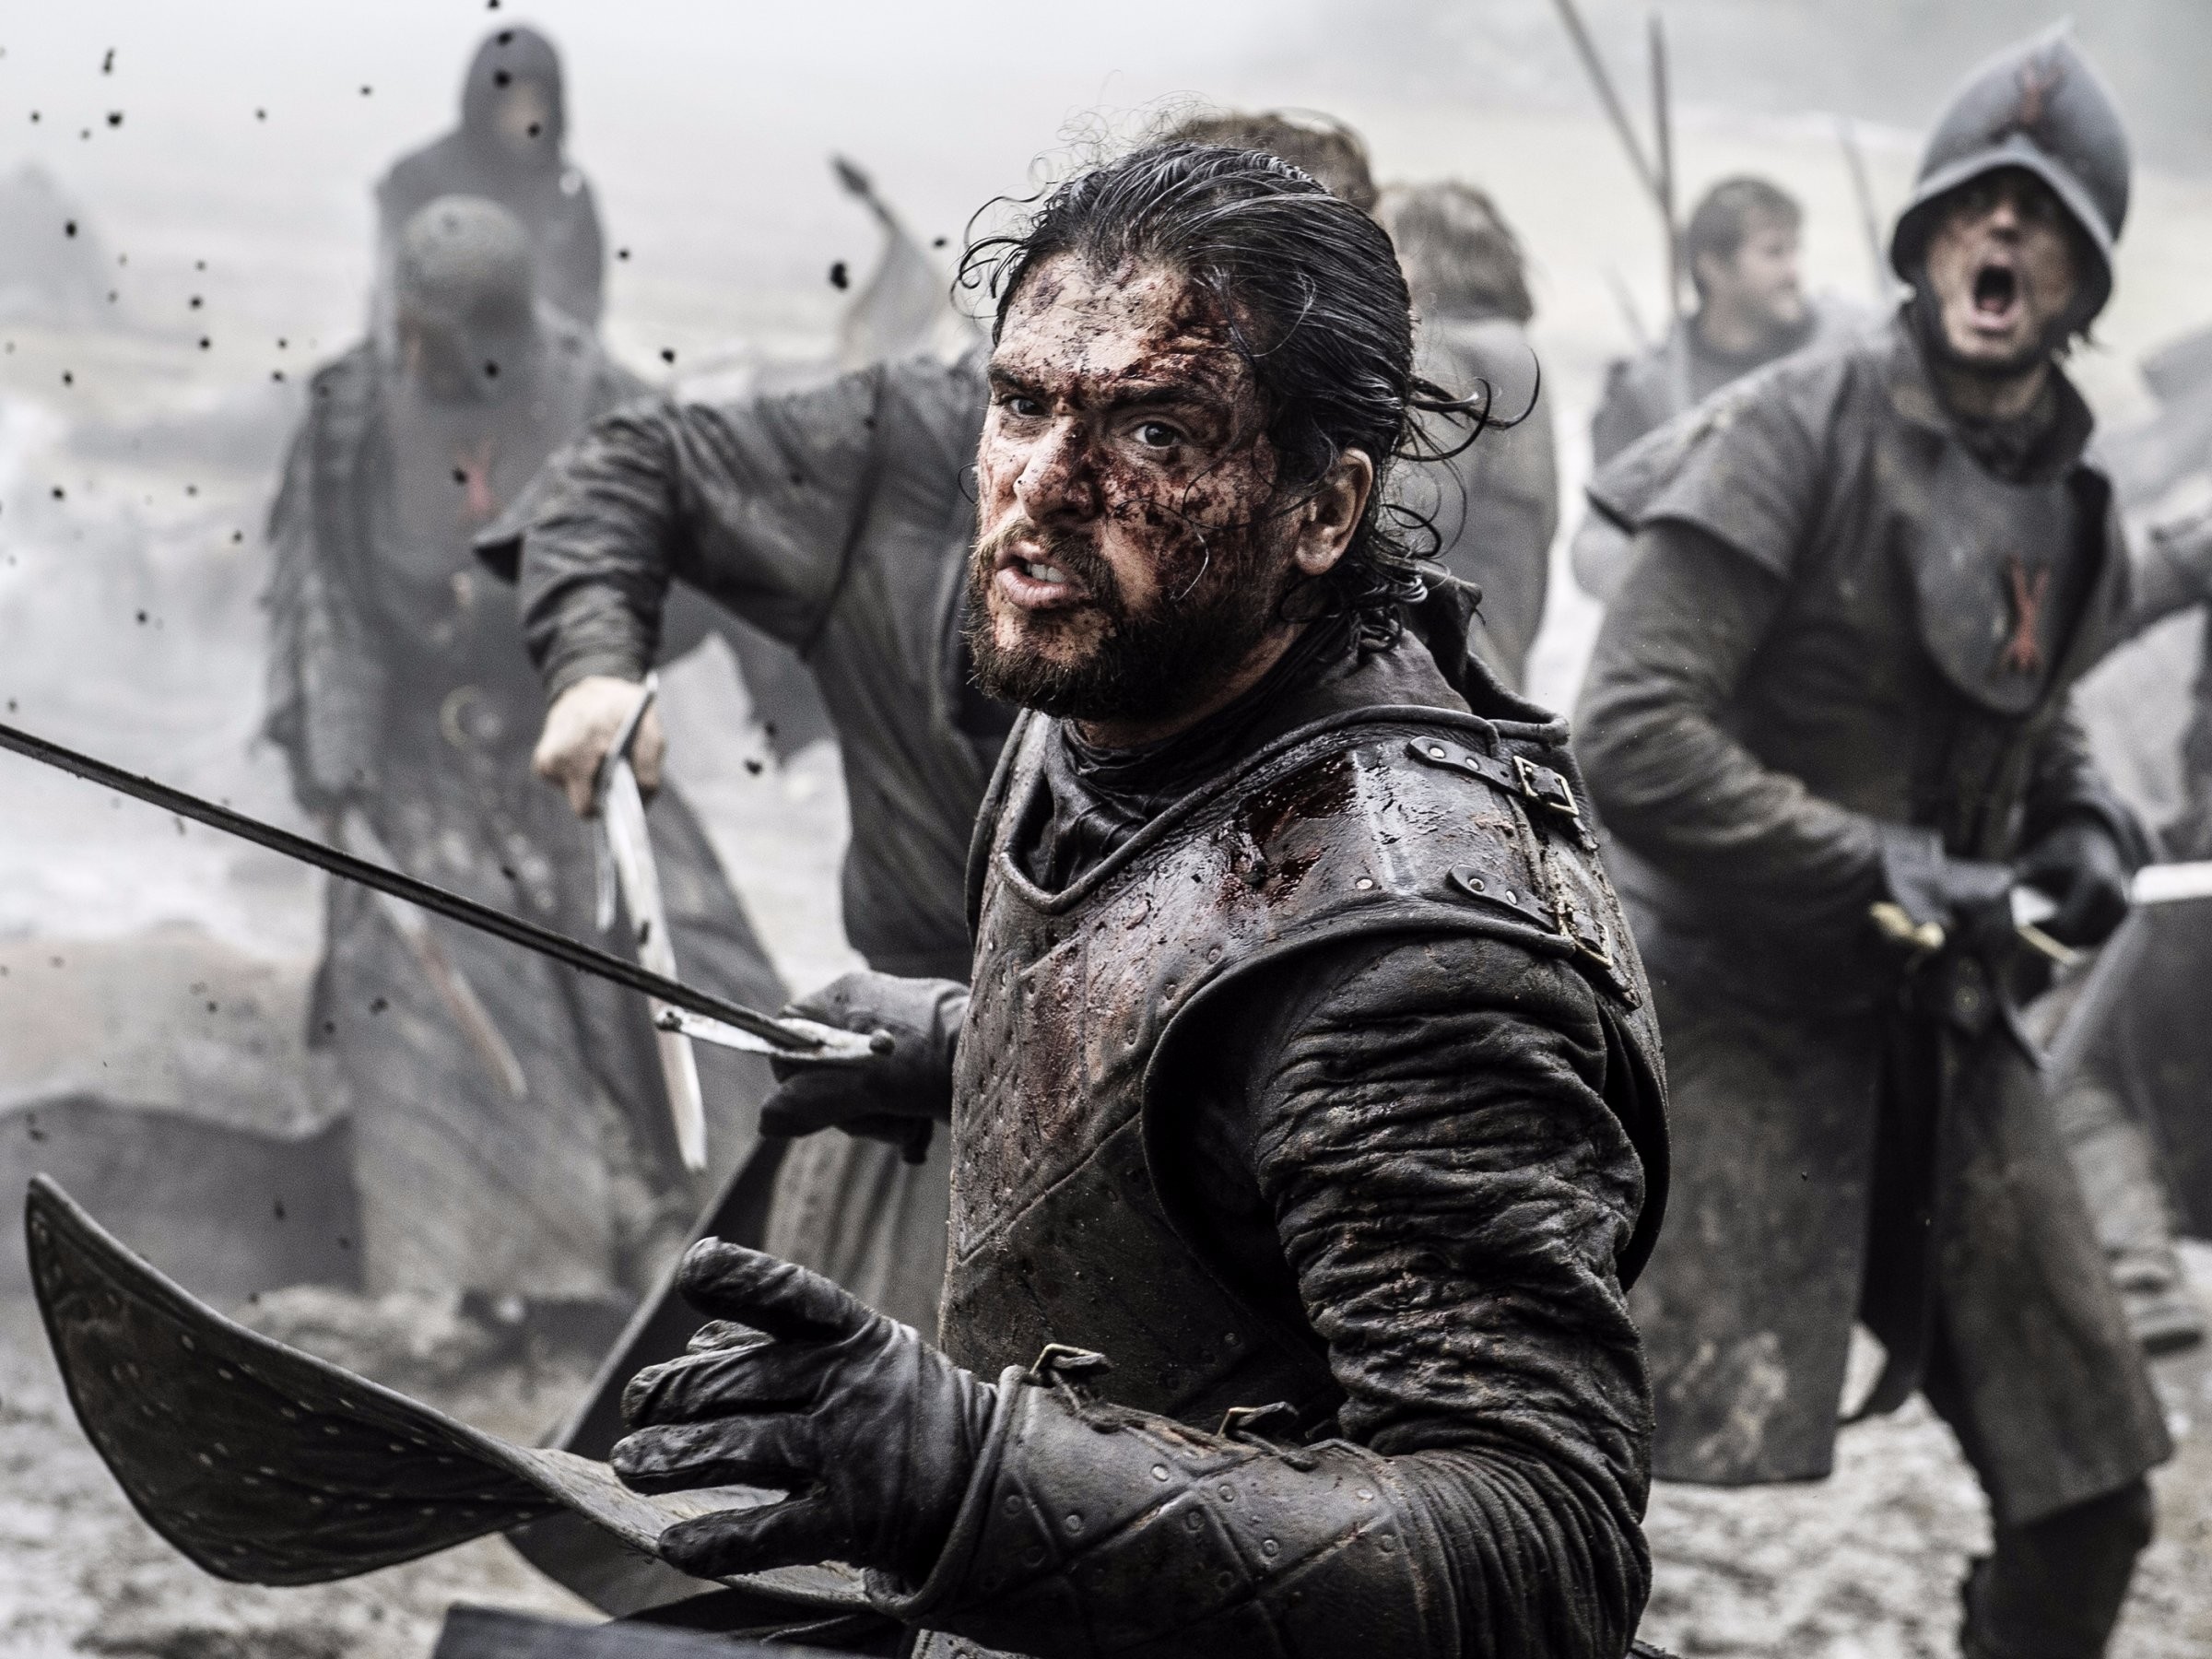 People 2400x1800 Game of Thrones Jon Snow battle Battle of the Bastards TV series actor blood sword armor film stills men